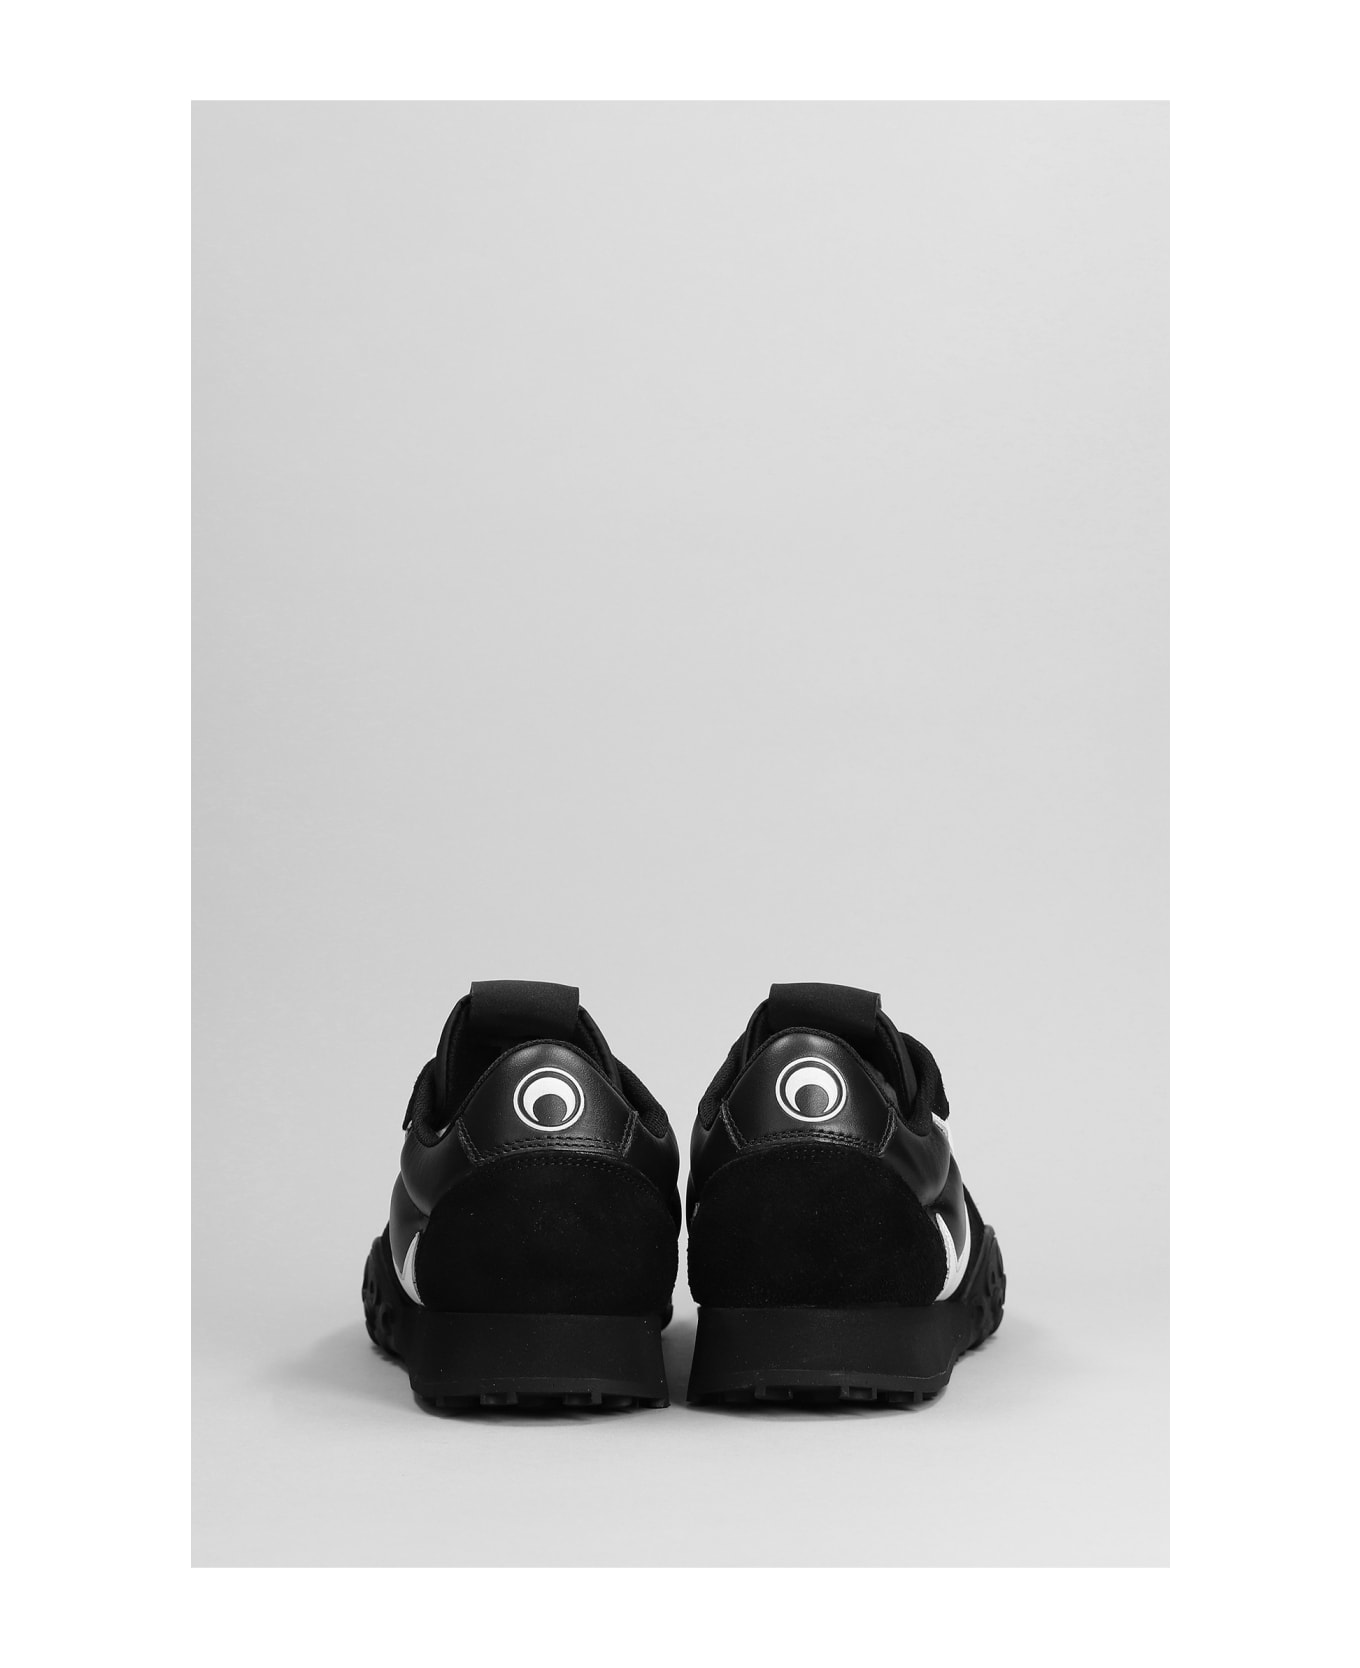 Marine Serre Ms Rise 22 Sneakers In Black Leather - black スニーカー